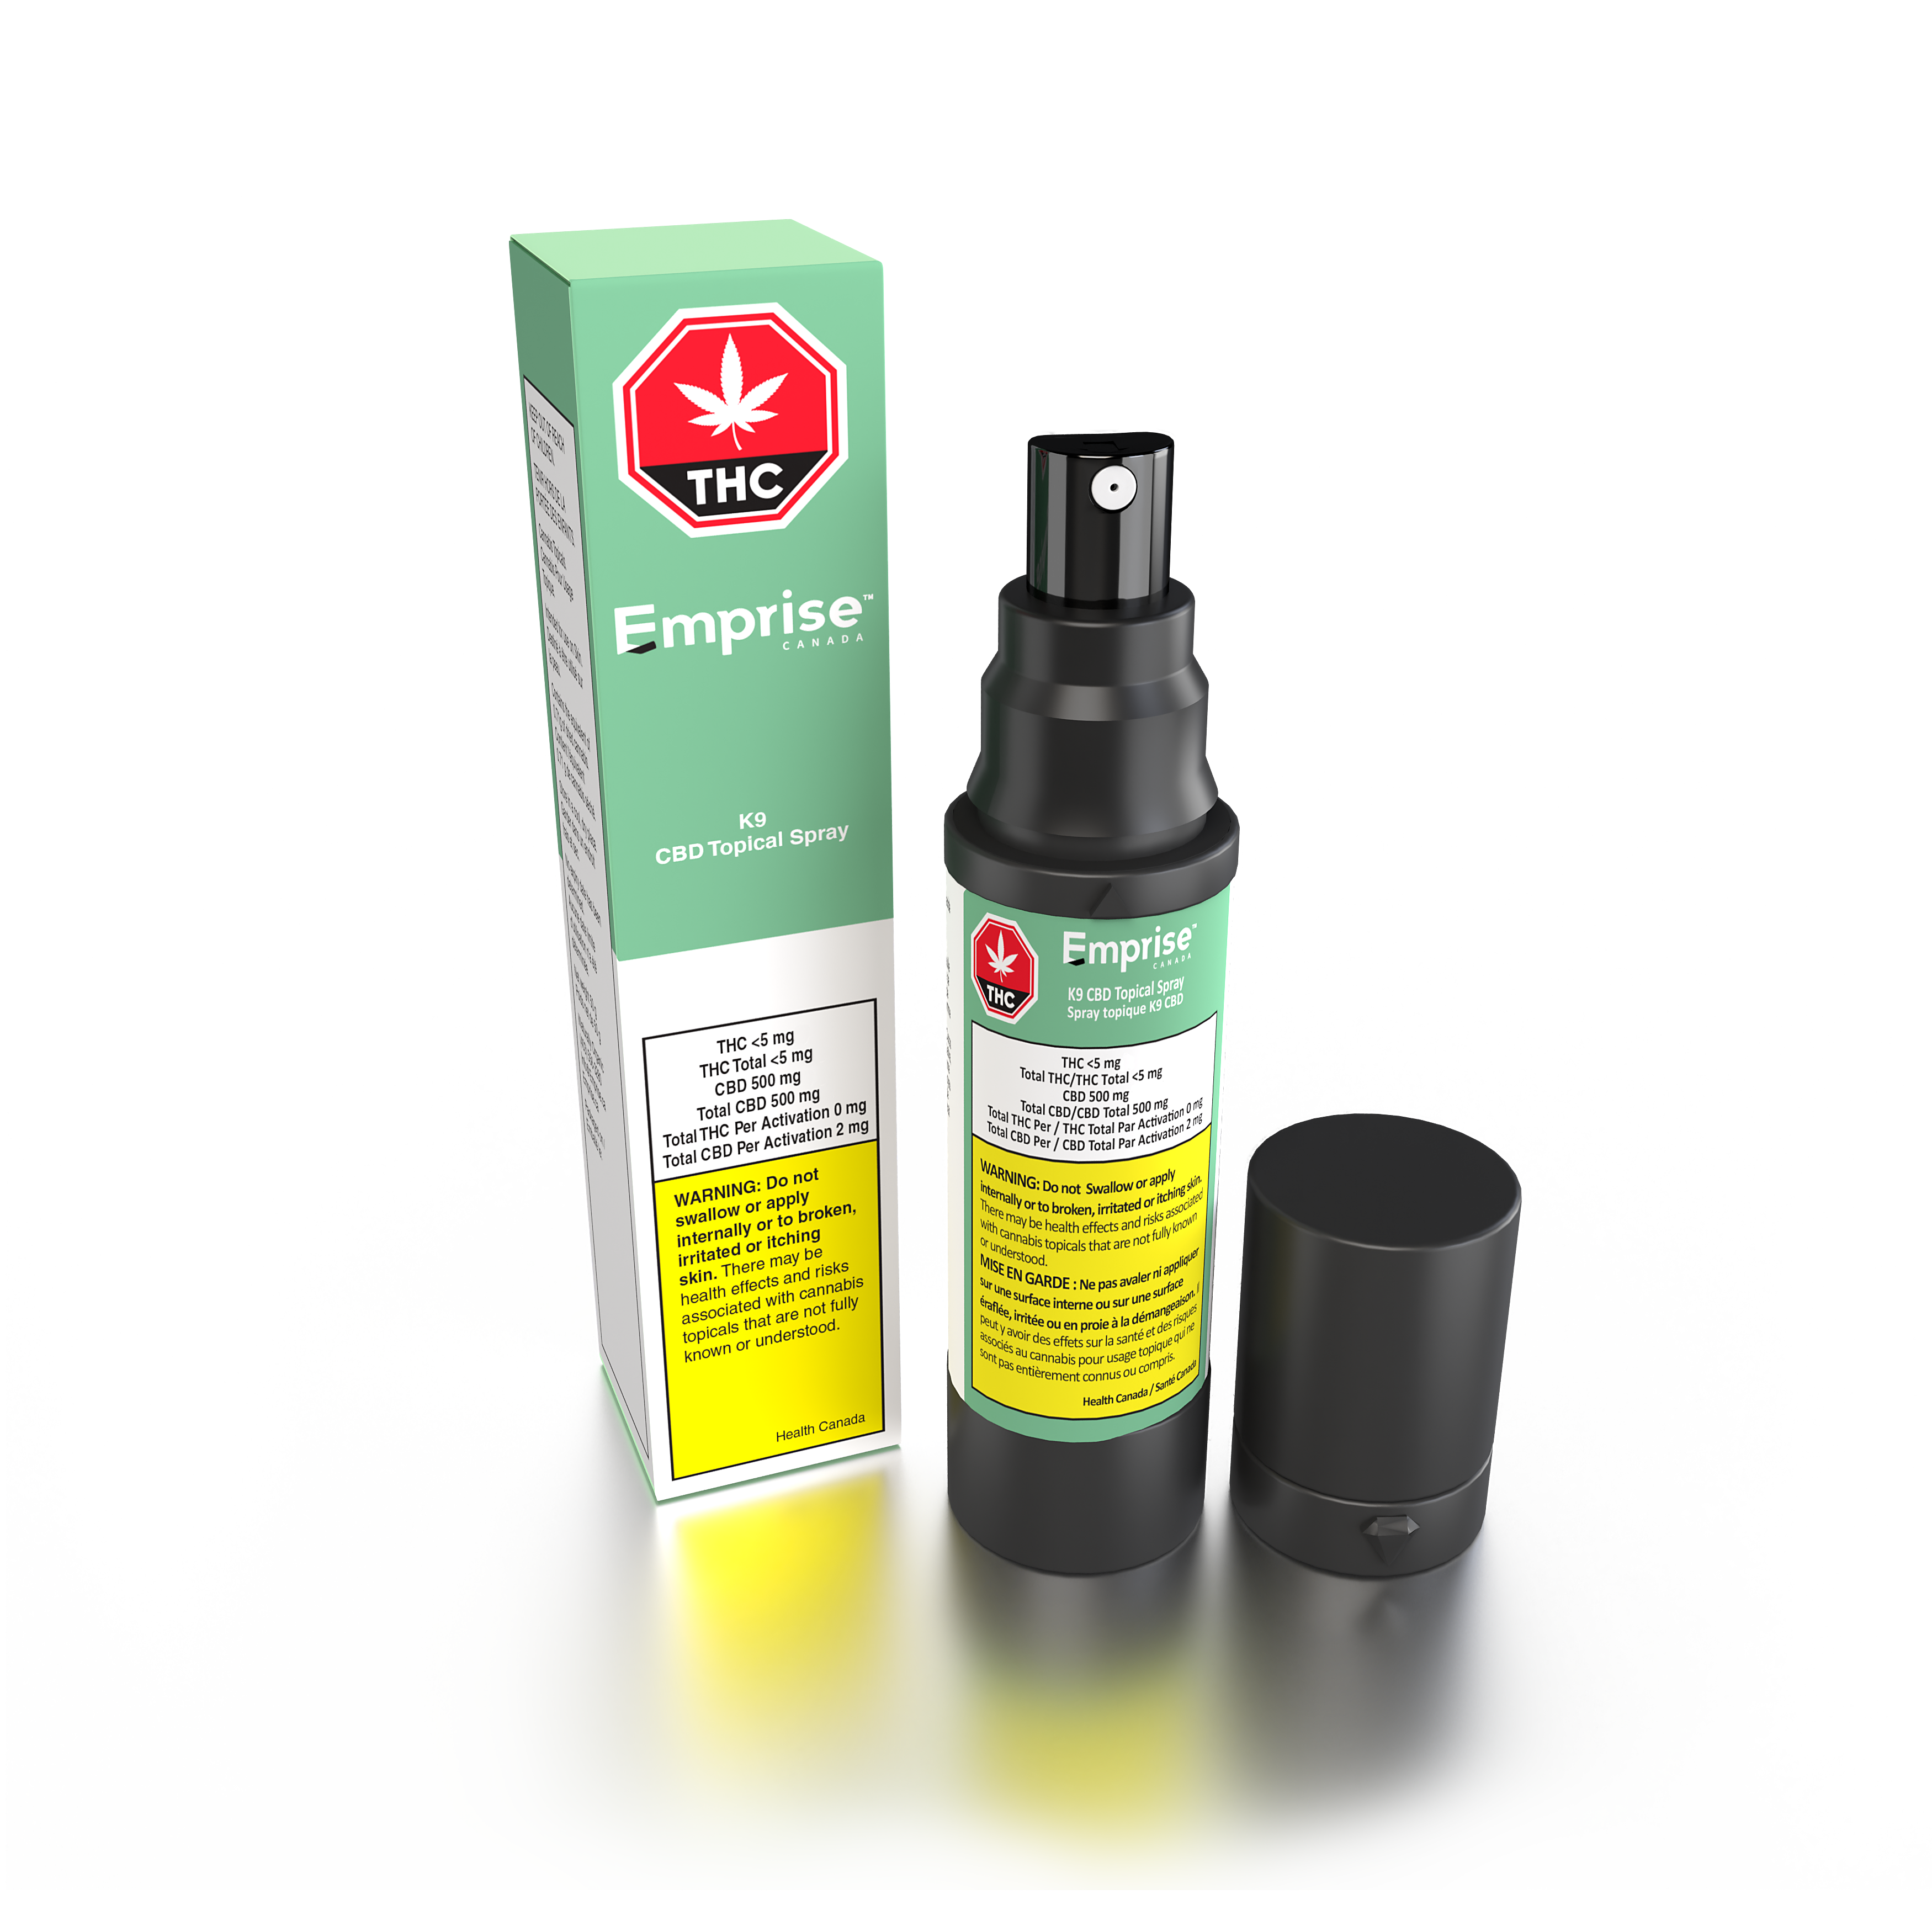 Cannabis Product K9 CBD Topical Spray Rapid Absorption Transdermal Nano 500mg CBD by Emprise Canada - 0